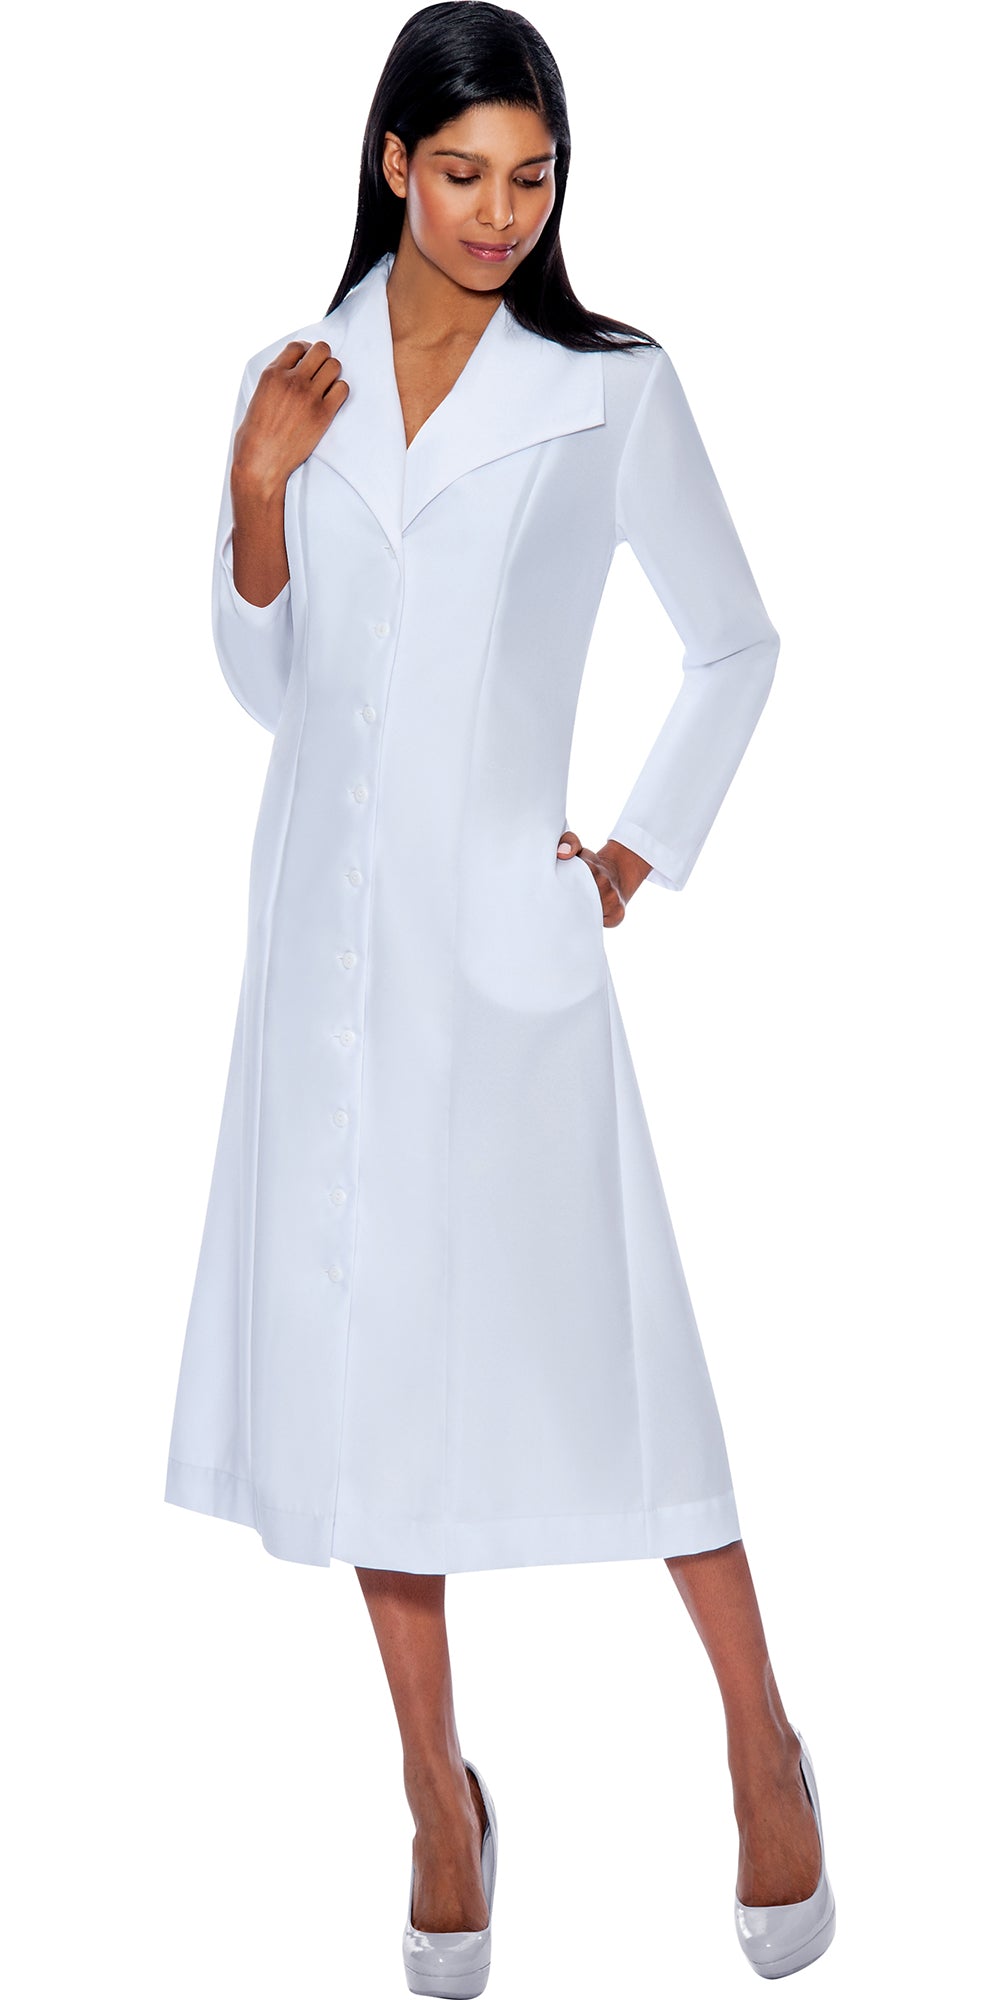 GMI G11573-White - Wide Collar One Piece Church Dress